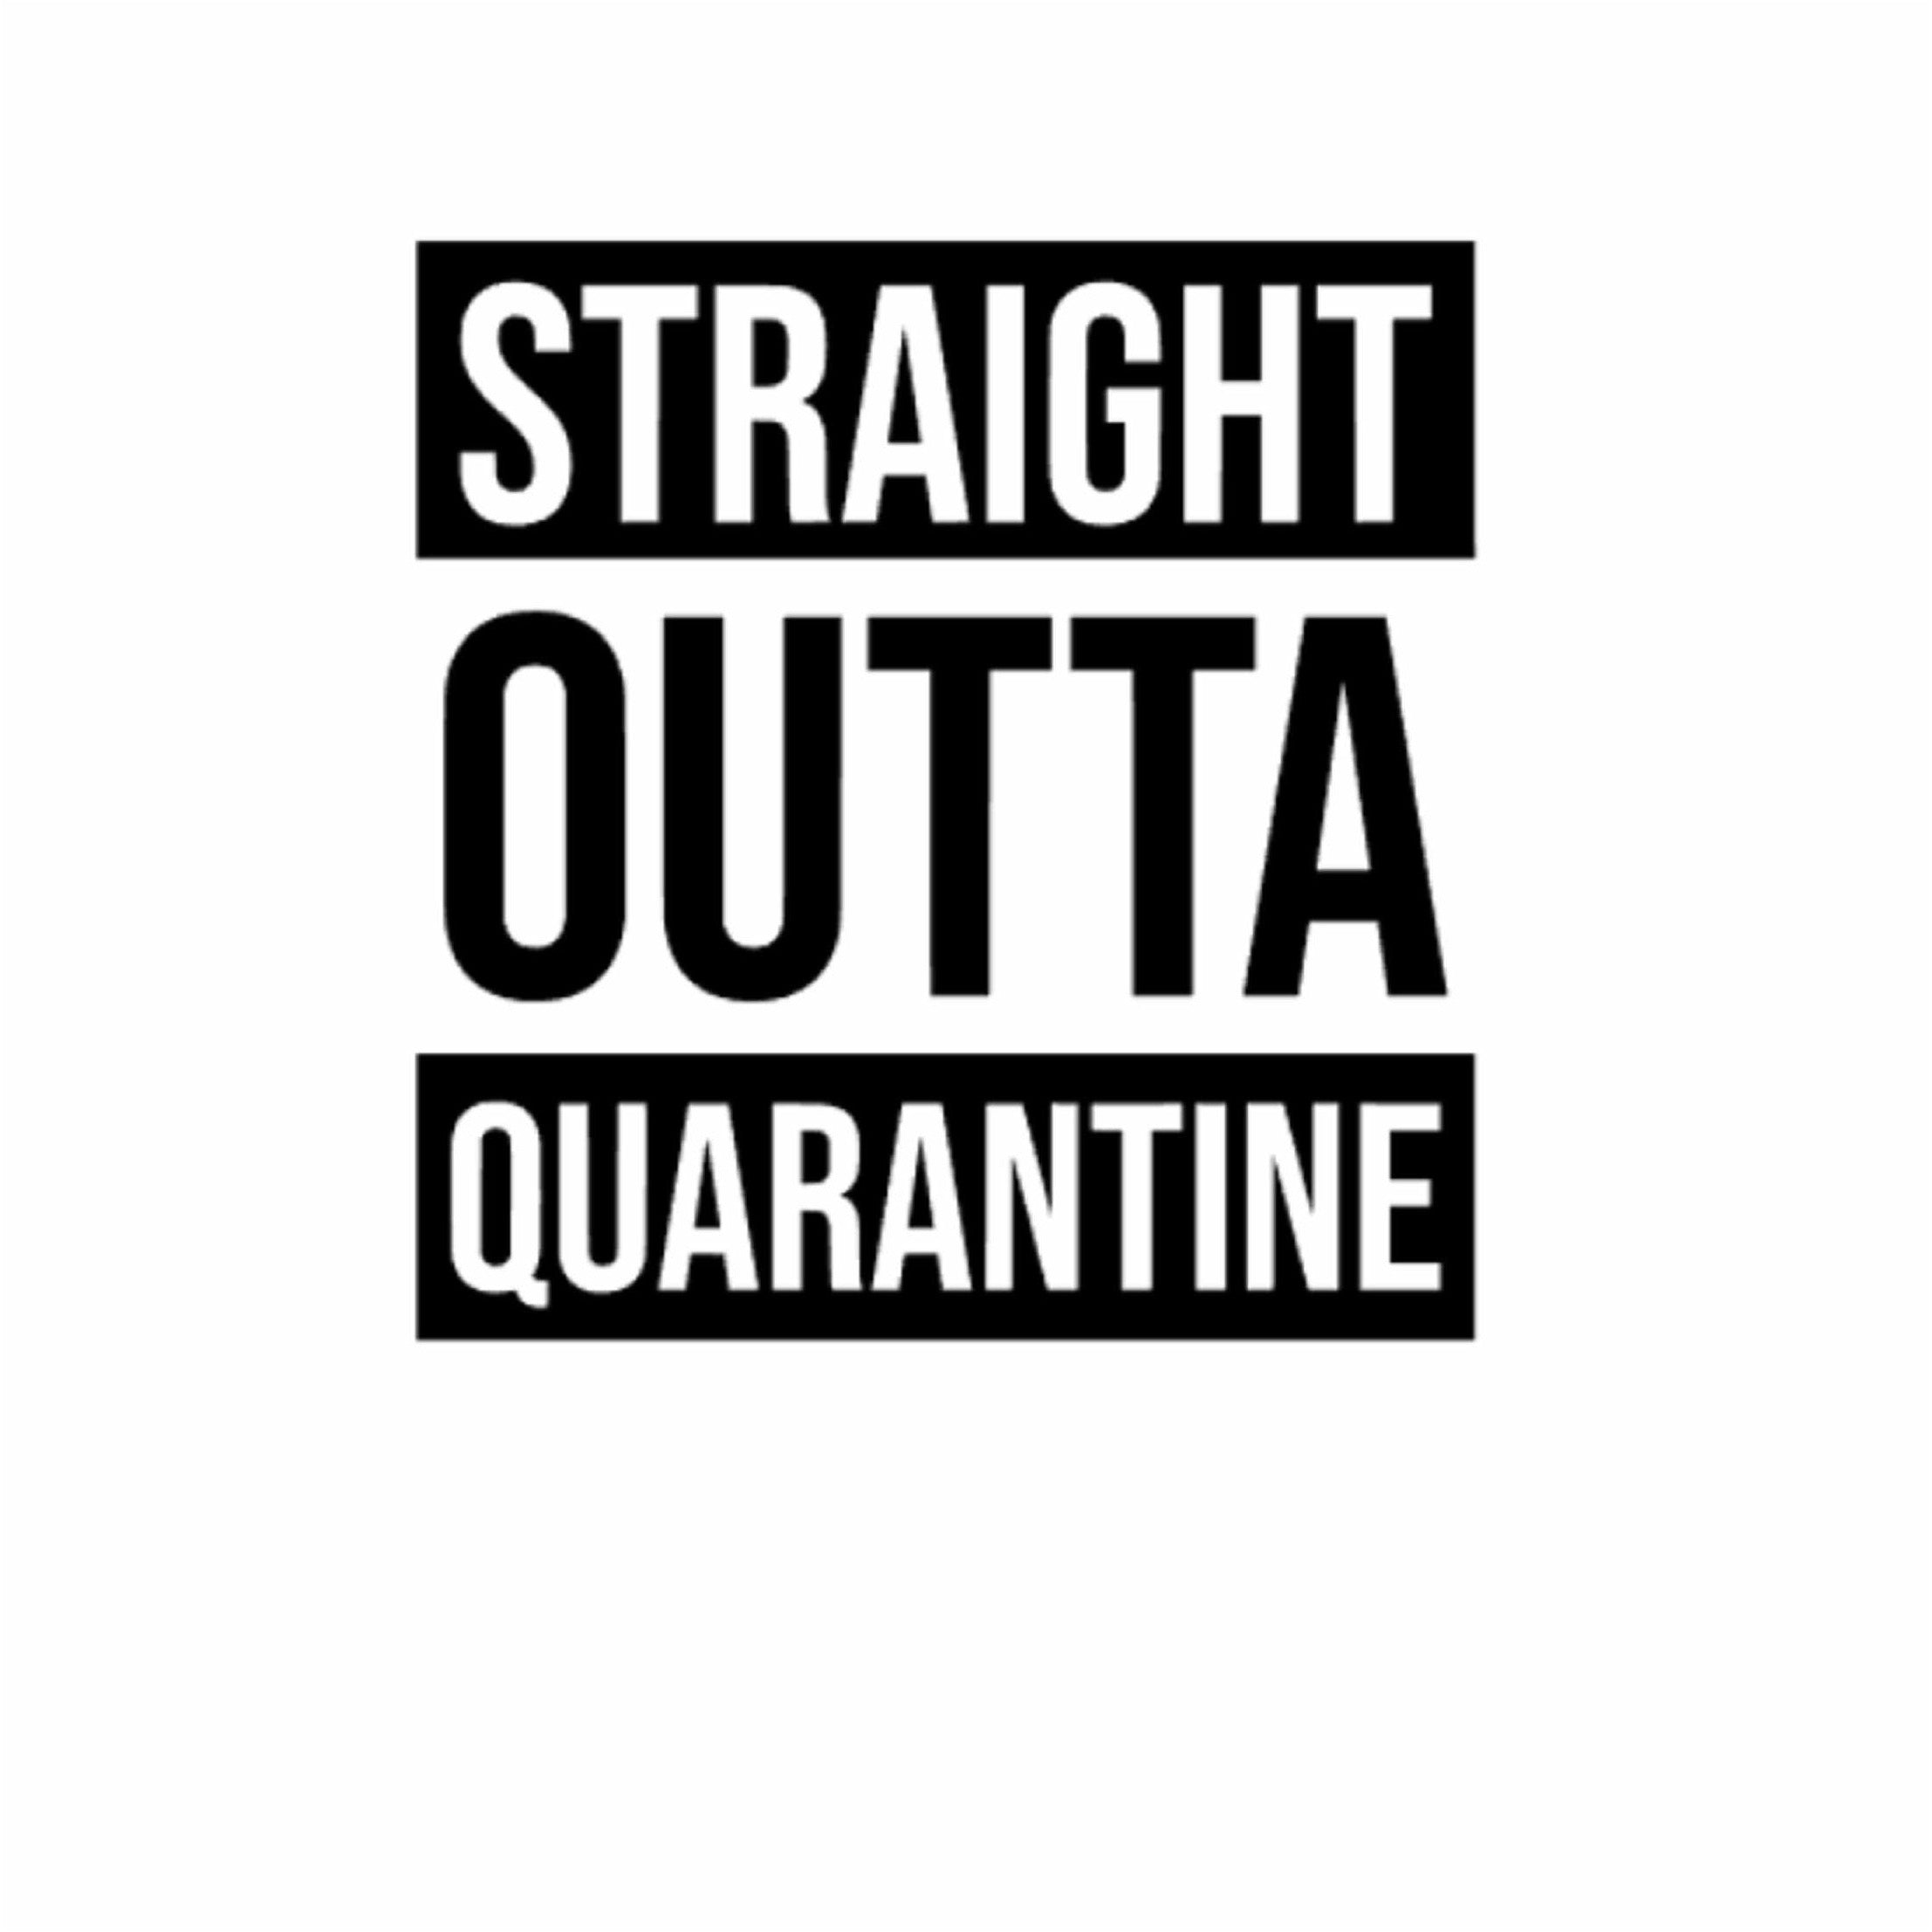 Straight Outta Quarantine Vinyl Sticker / Decal - My Crafty Dog